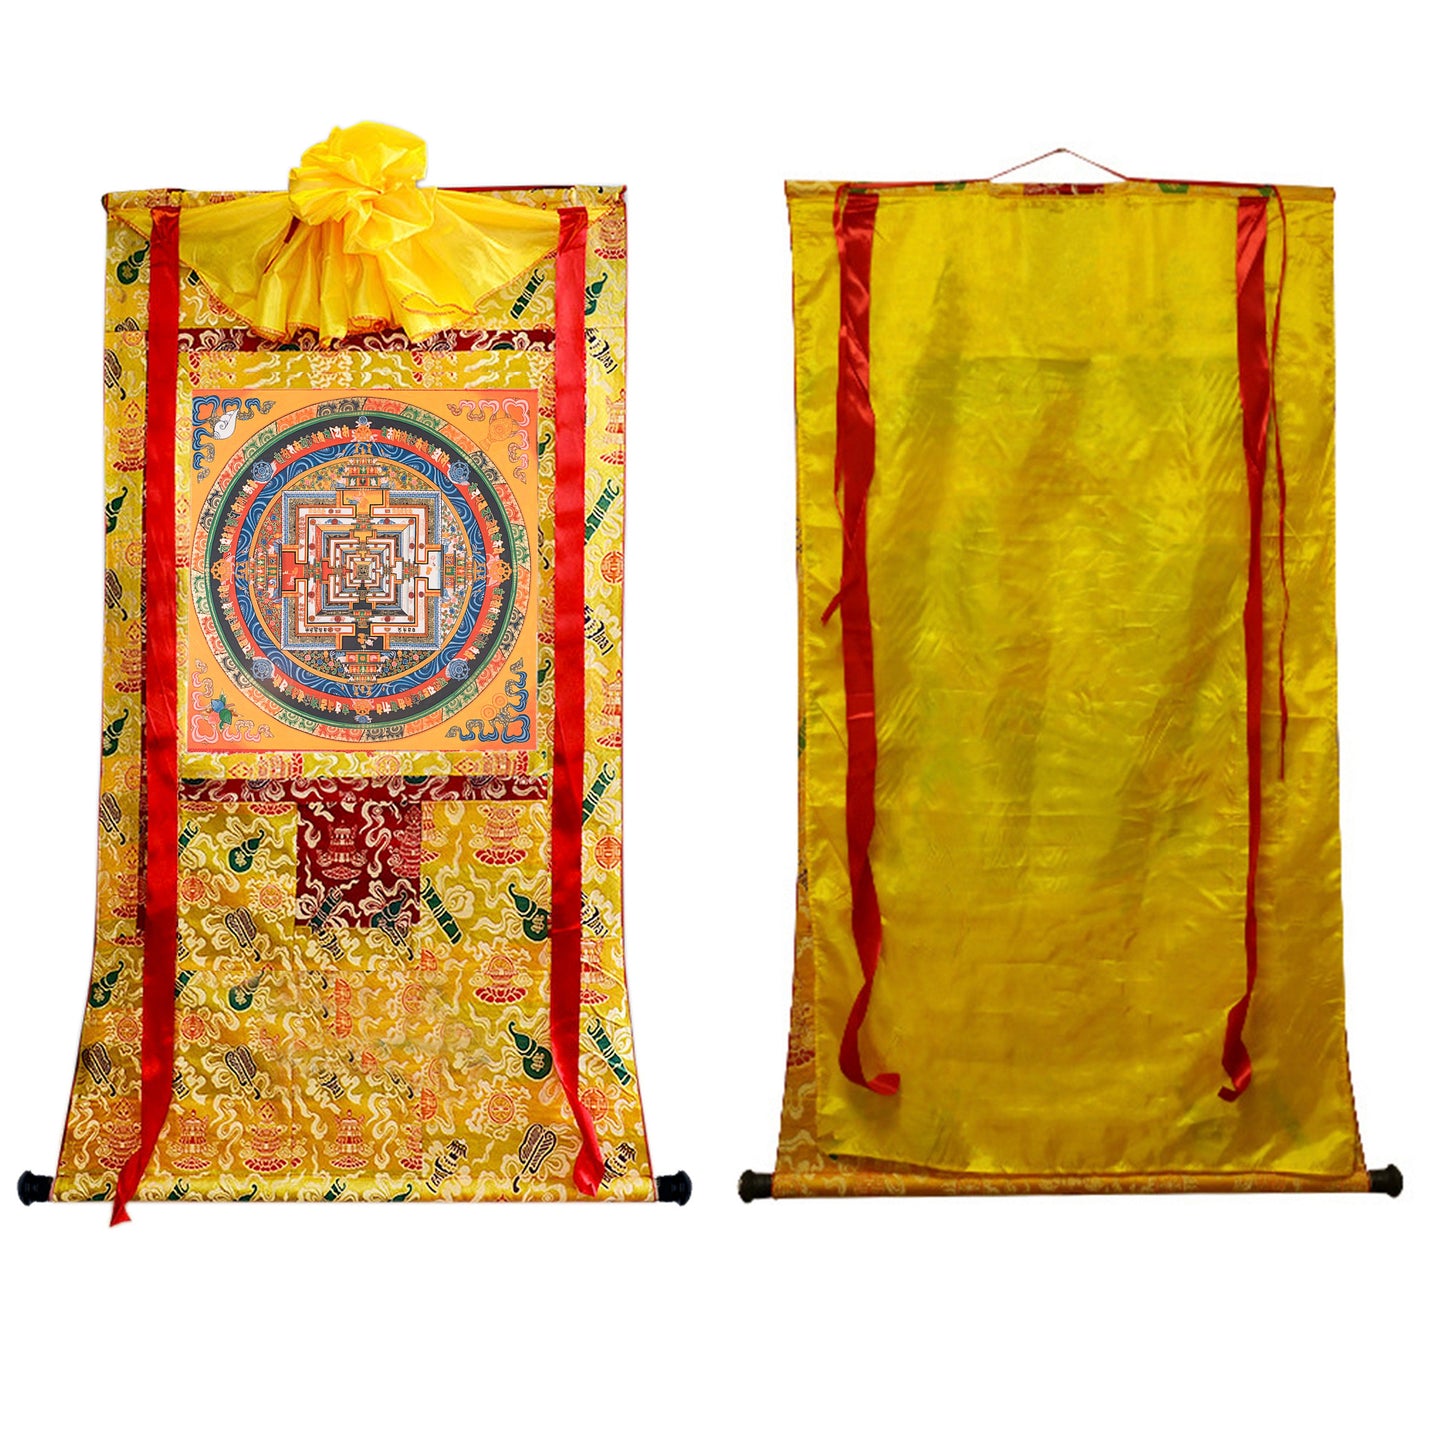 Navagraha Mandala Hand Painted Thankga